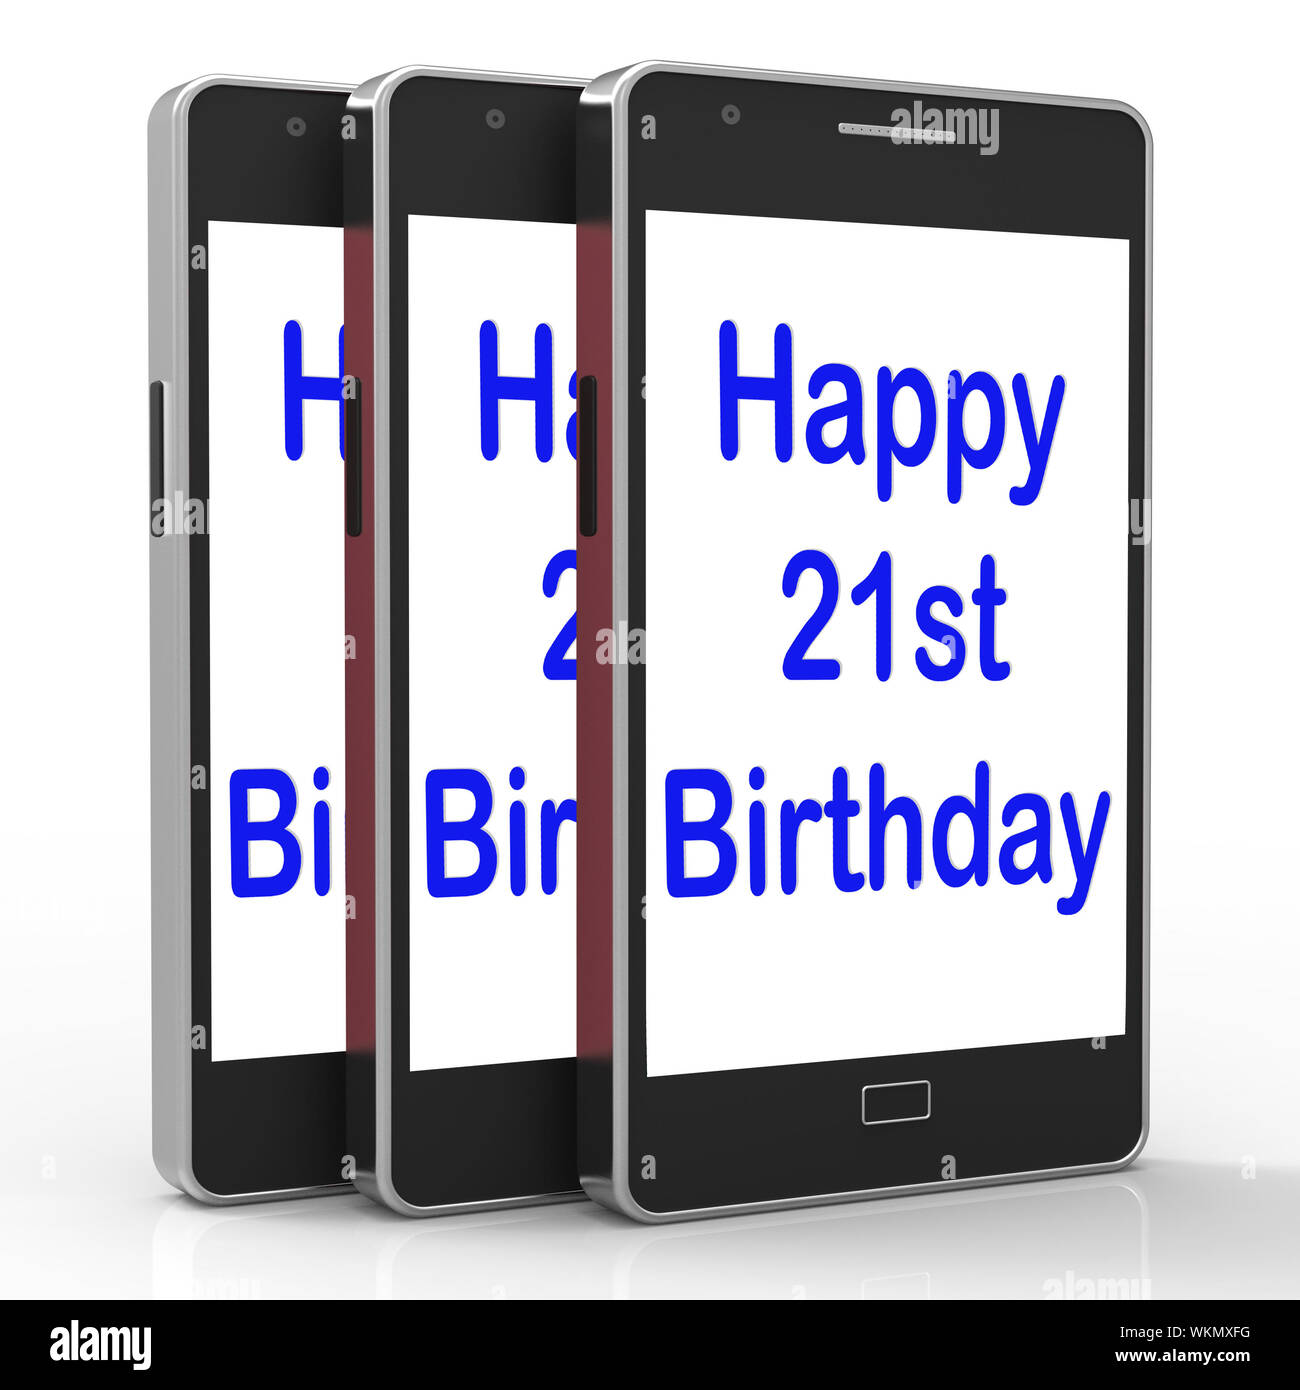 Happy 21st Birthday Smartphone Showing Congratulating On Twenty One ...